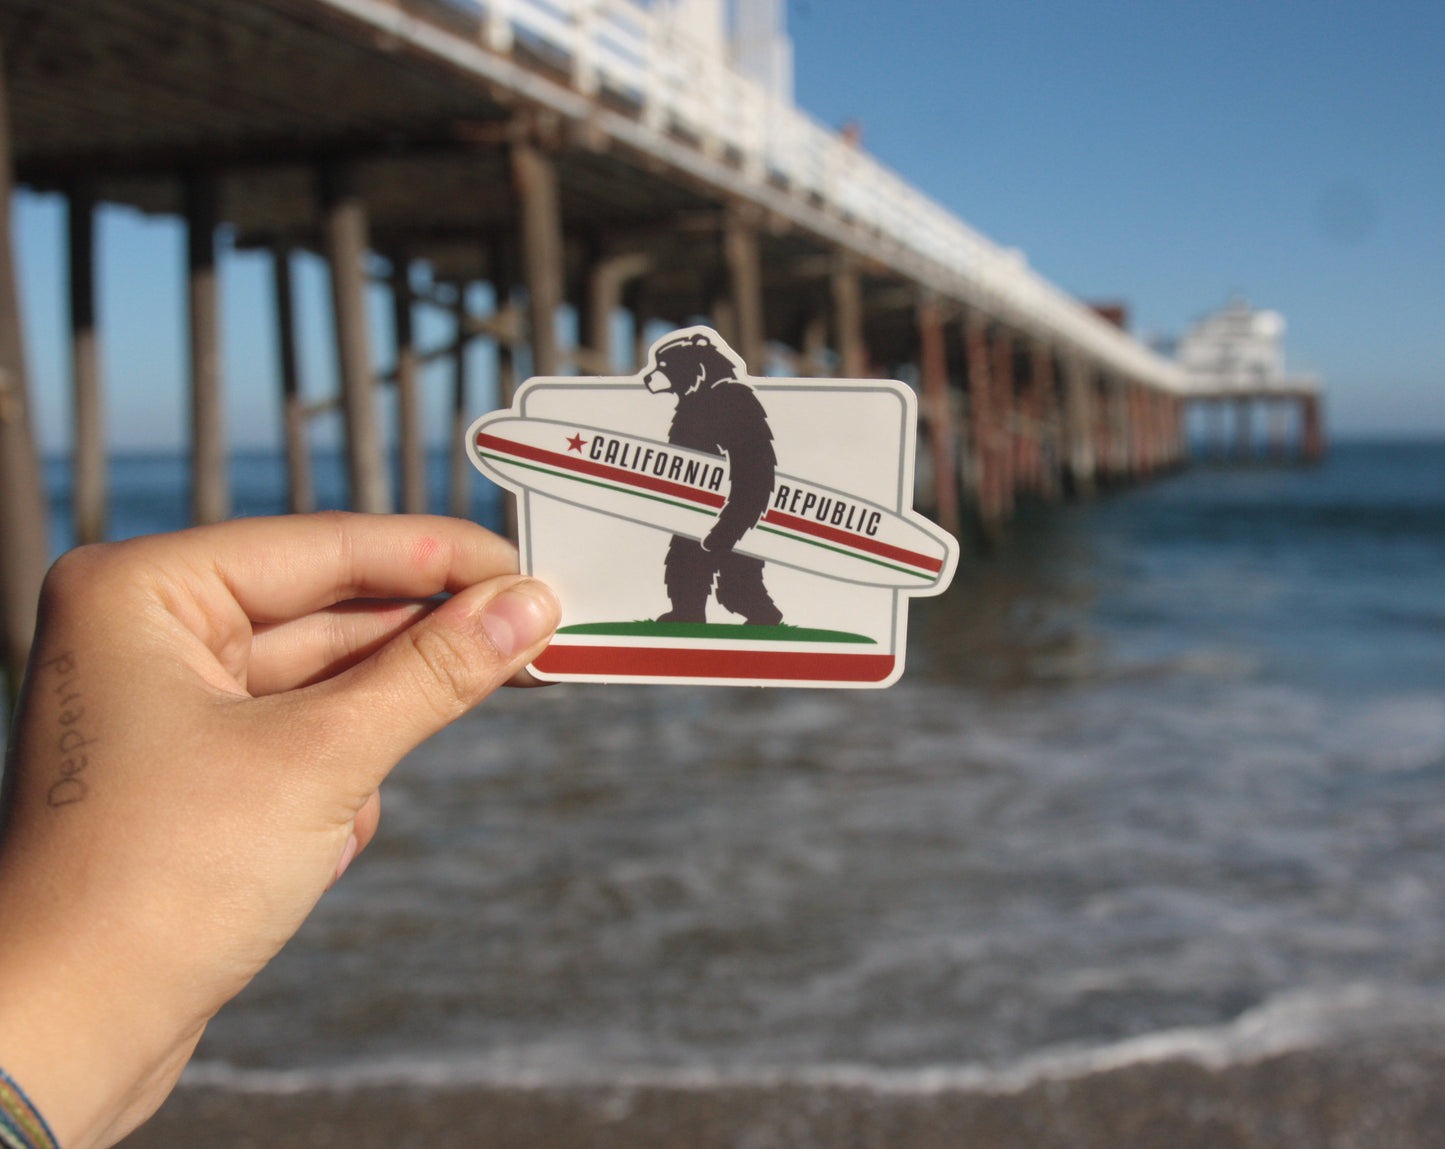 California Surf Bear Sticker